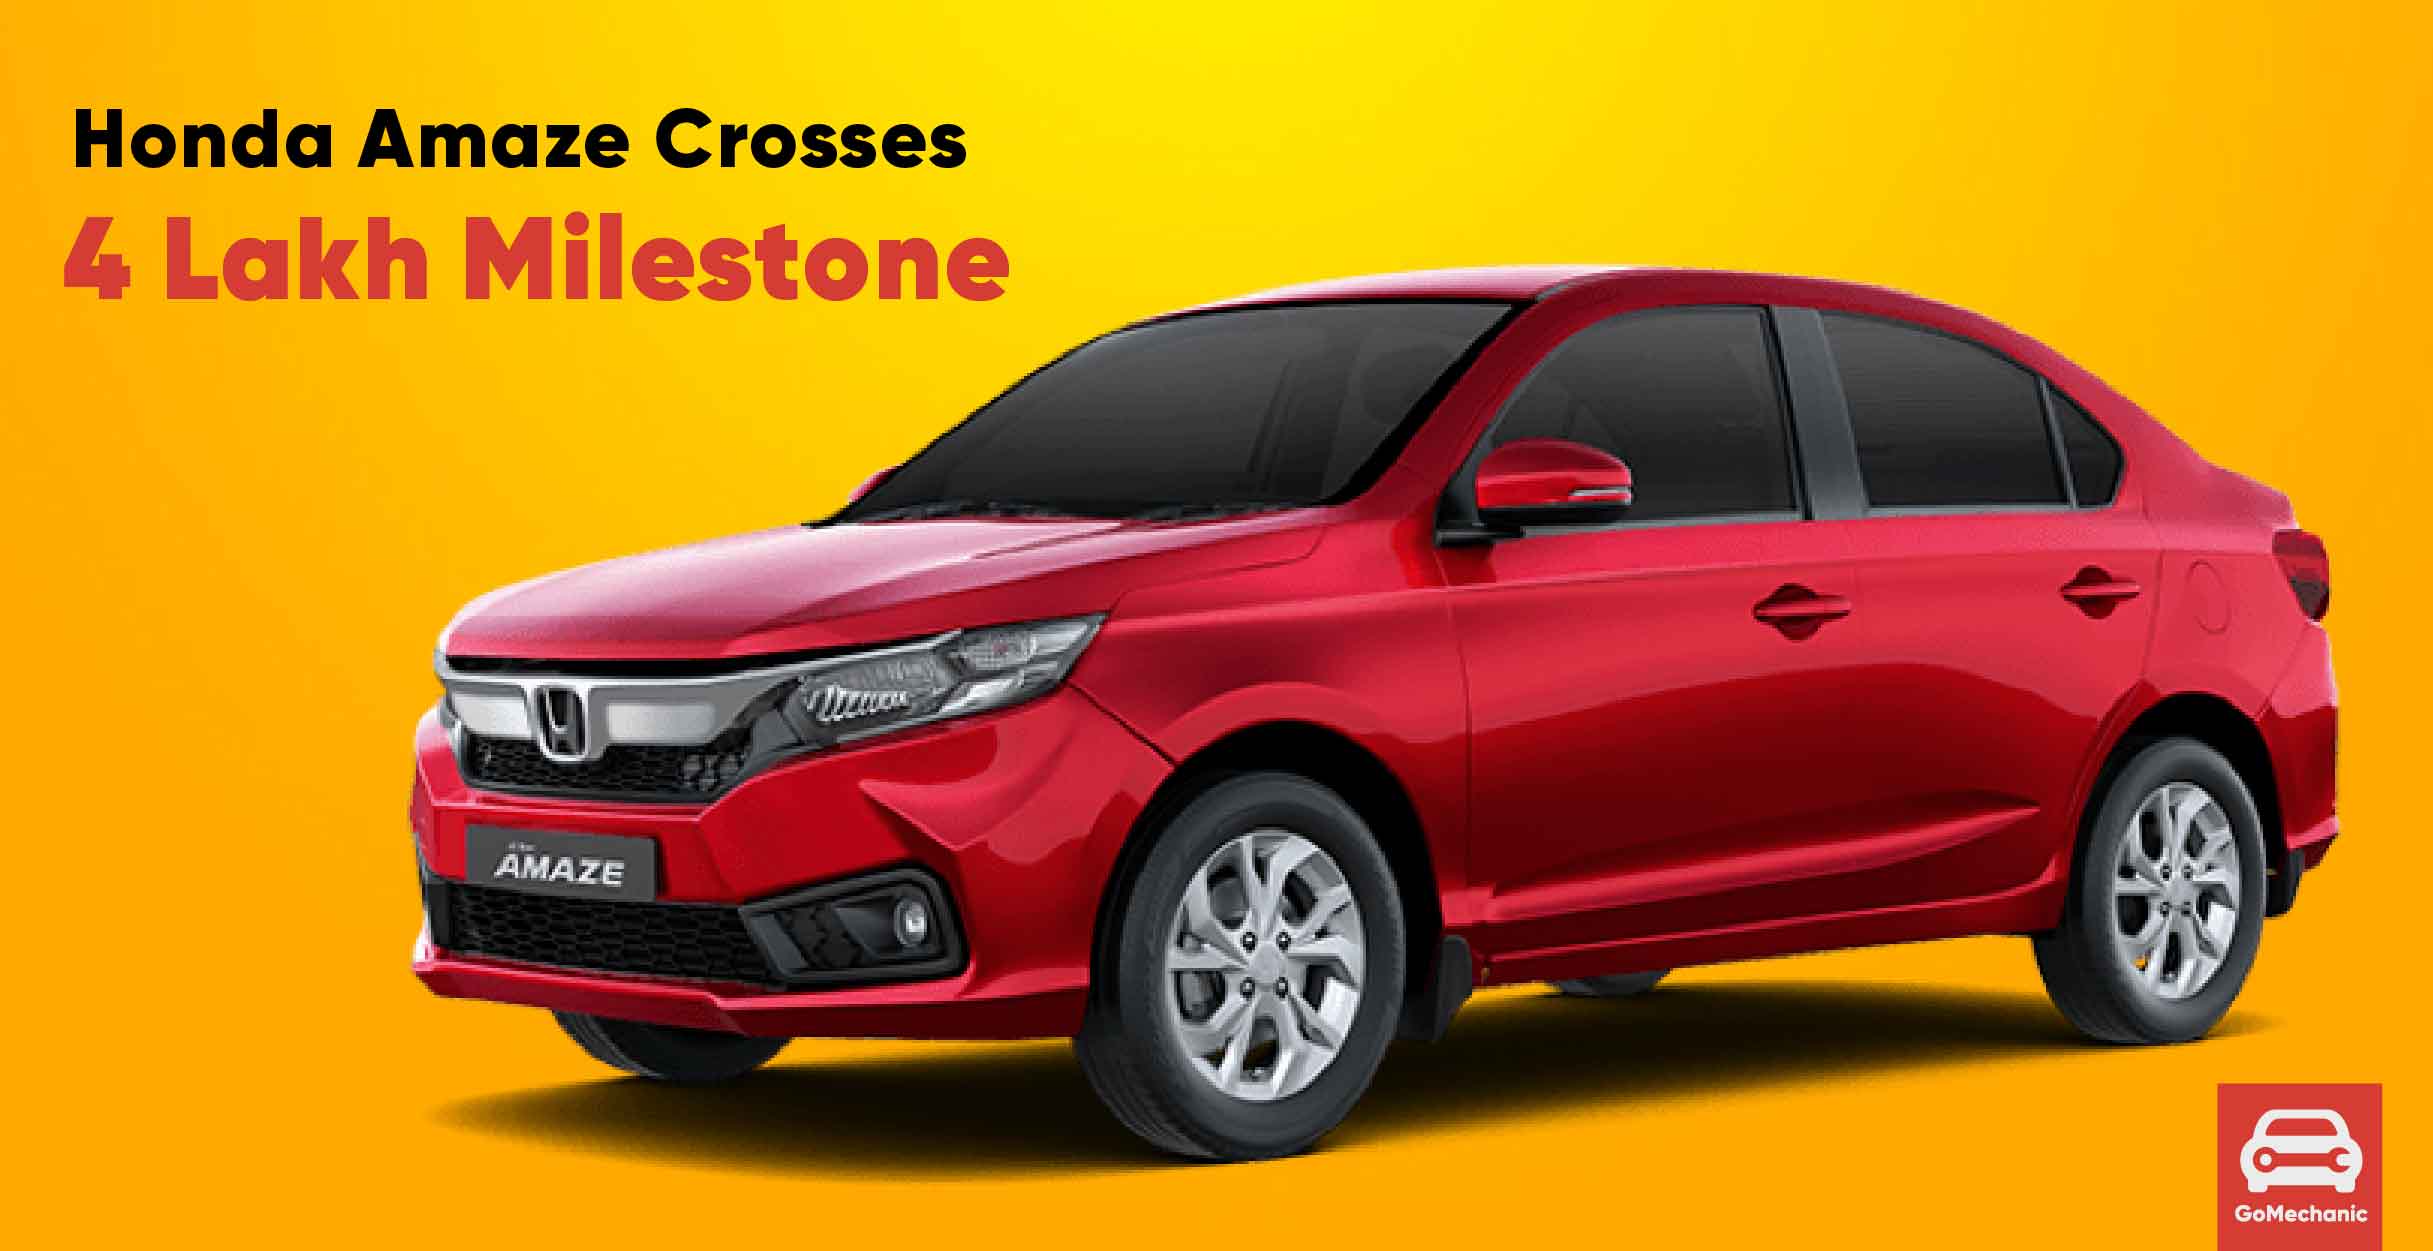 Honda Amaze crosses 4 lakh milestone in India